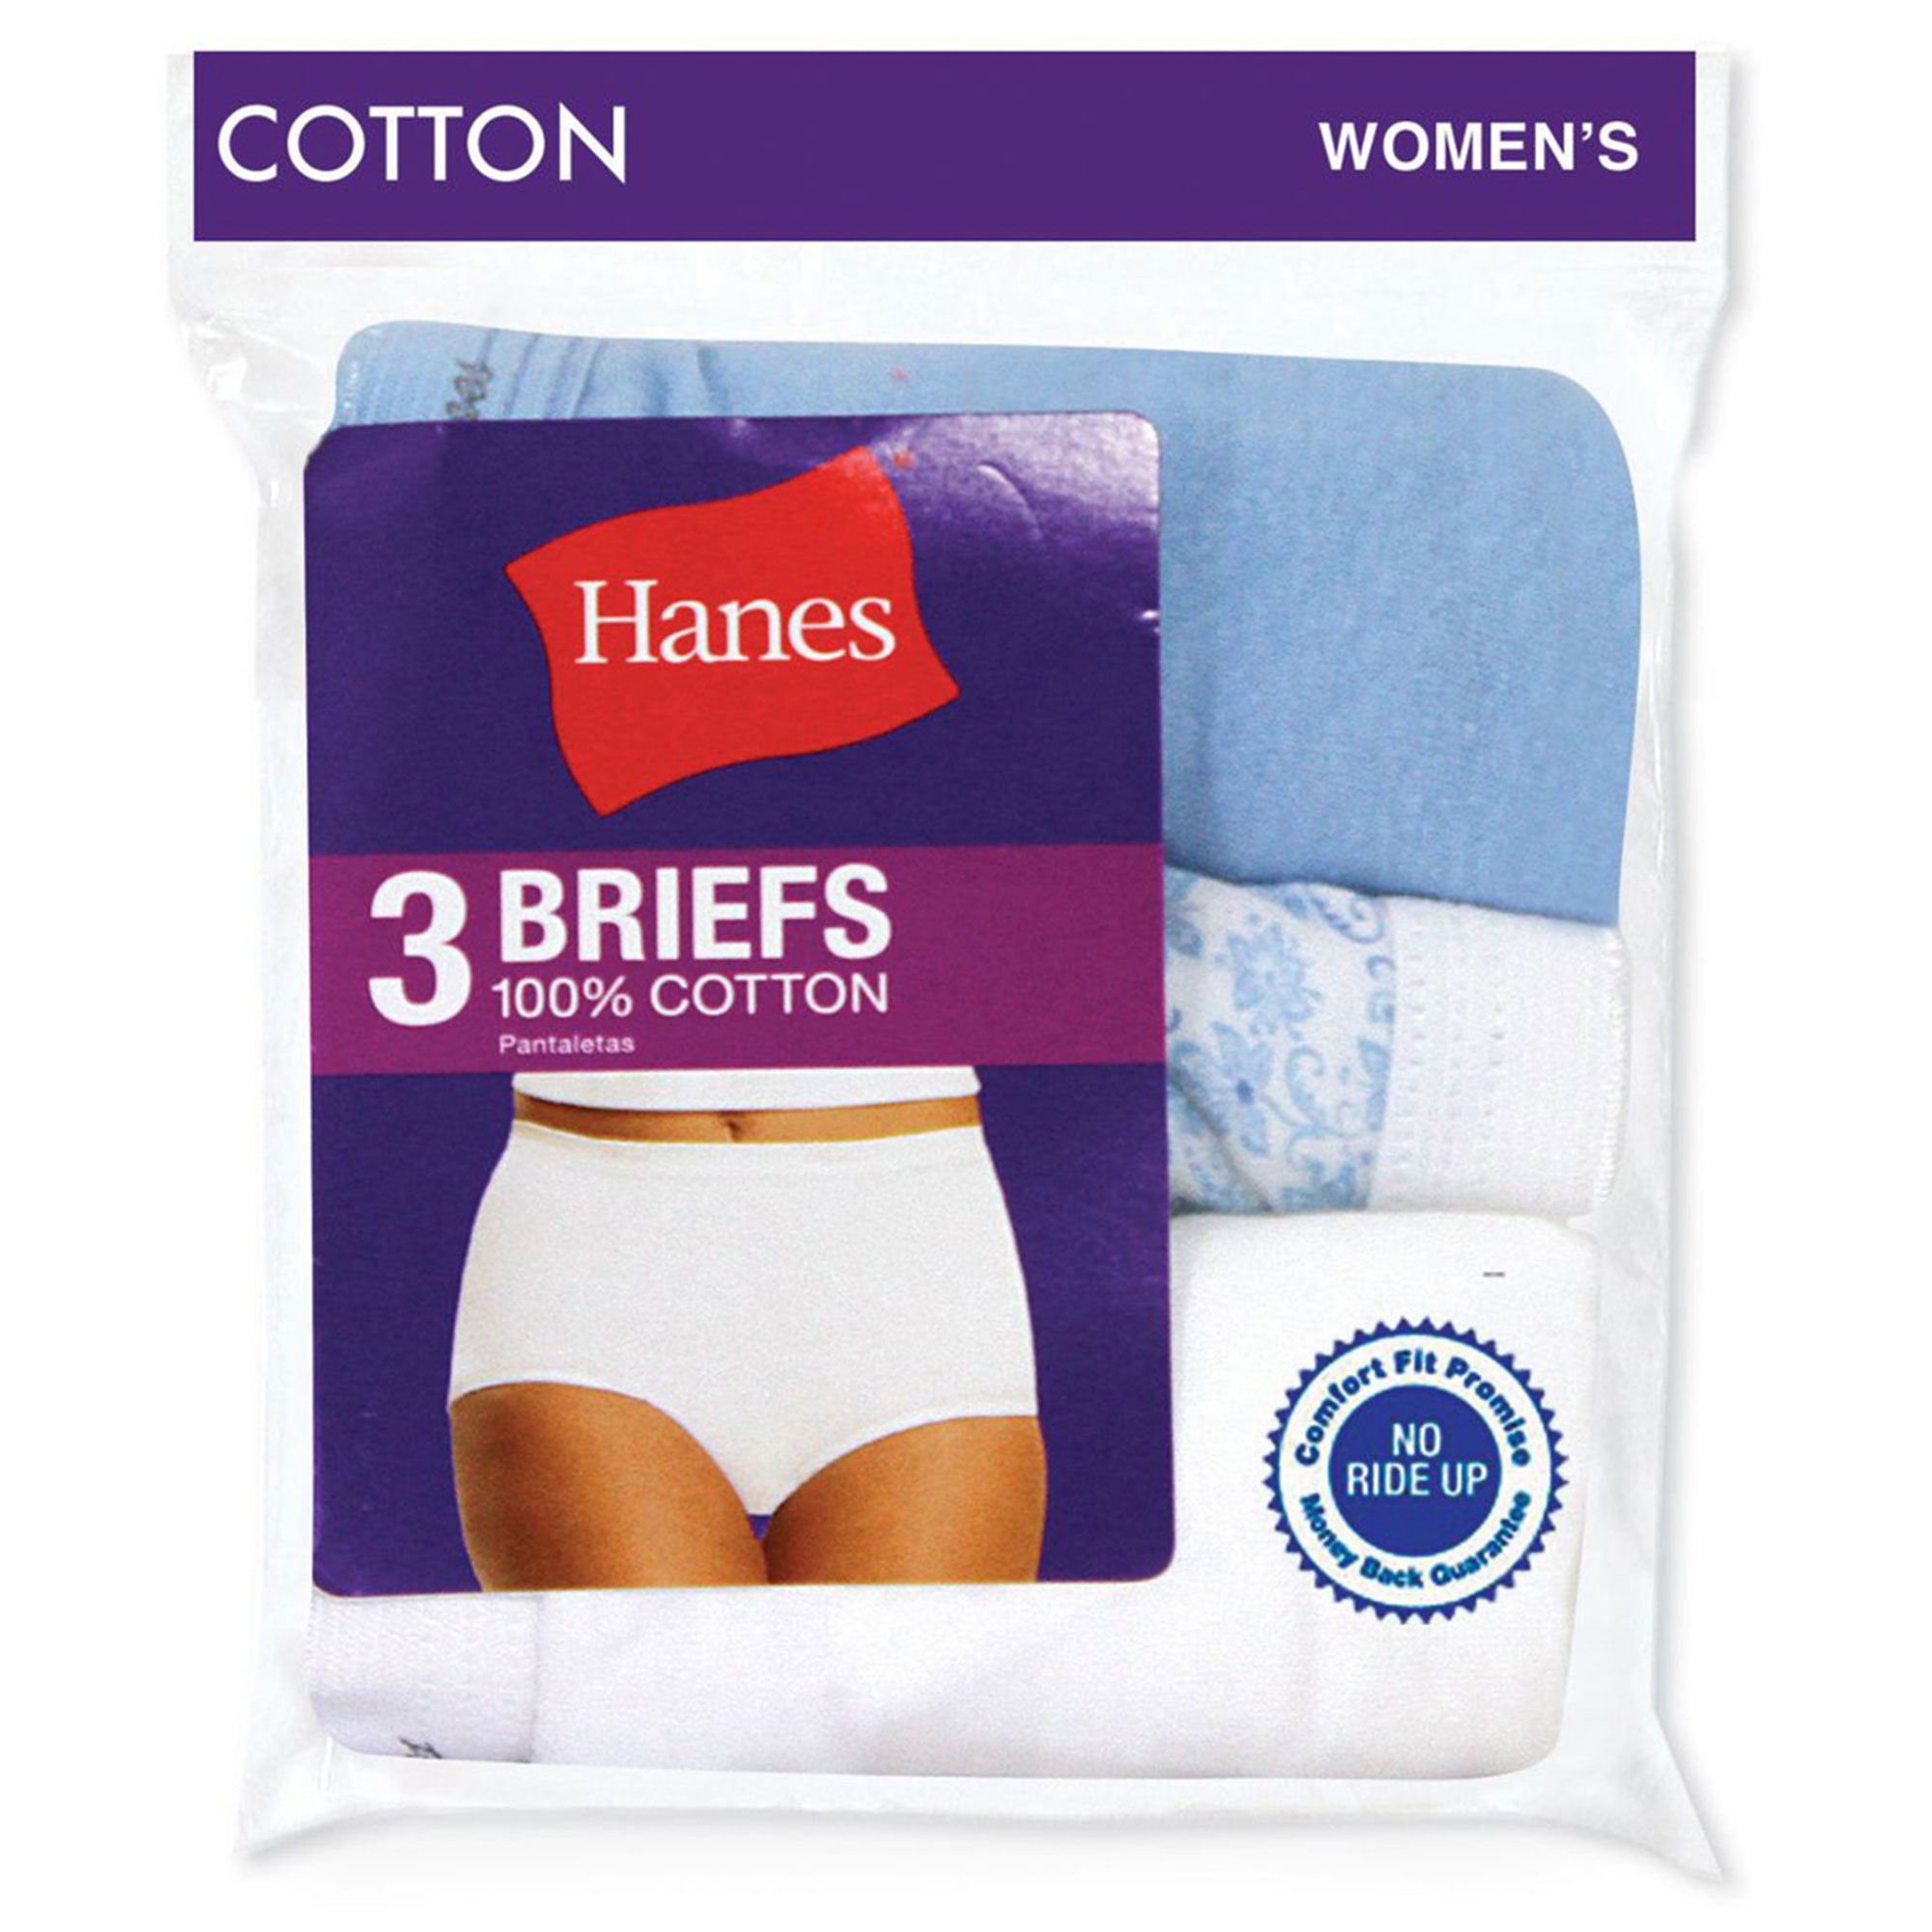 Hanes cotton briefs womens